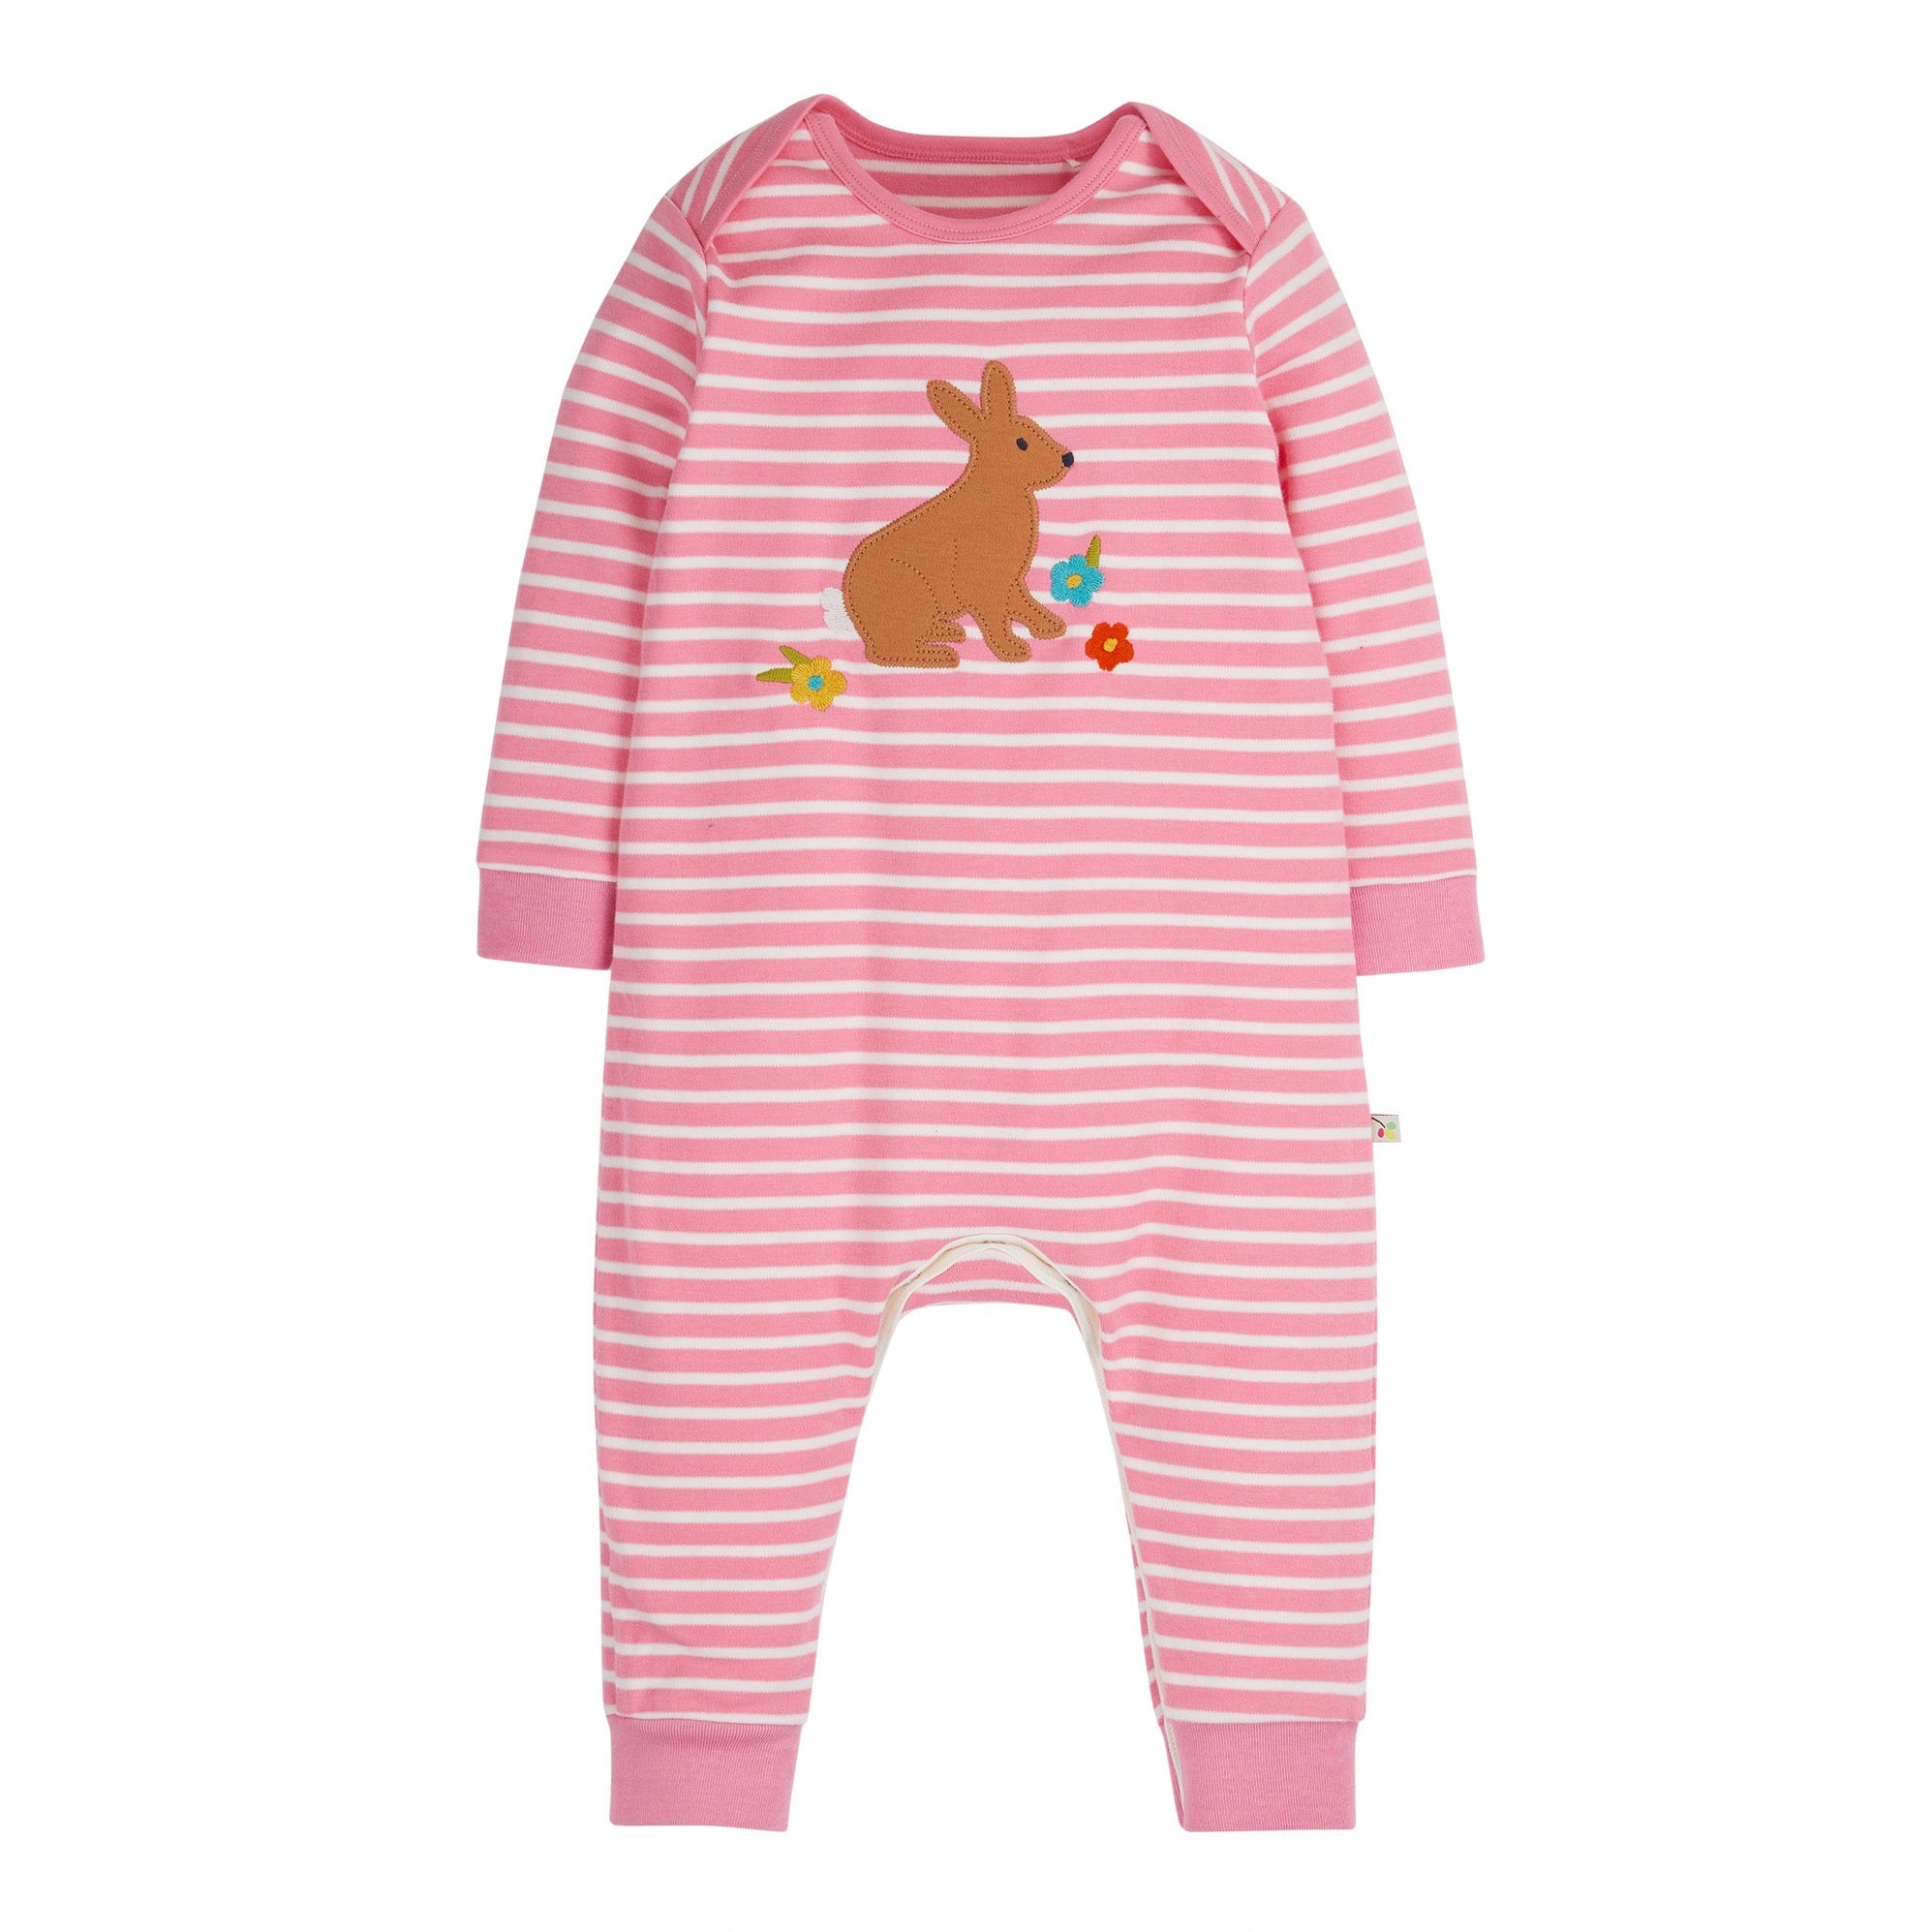 Frugi Charlie Romper Rps301mpb Bunny Clothing NEWBORN / Pink,0-3M / Pink,3-6M / Pink,6-12M / Pink